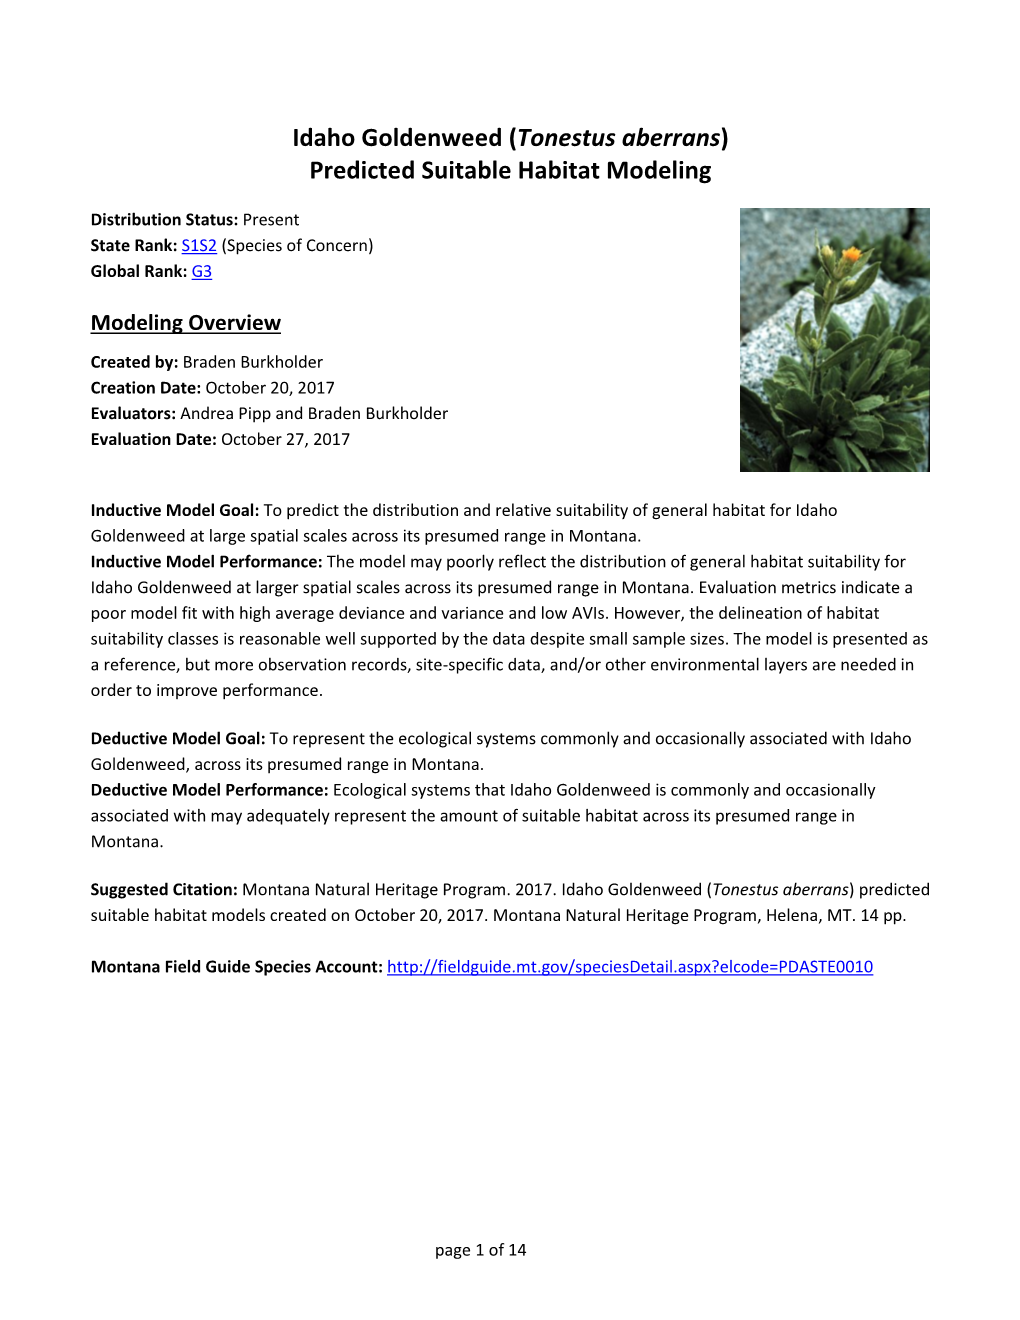 Idaho Goldenweed (Tonestus Aberrans) Predicted Suitable Habitat Modeling